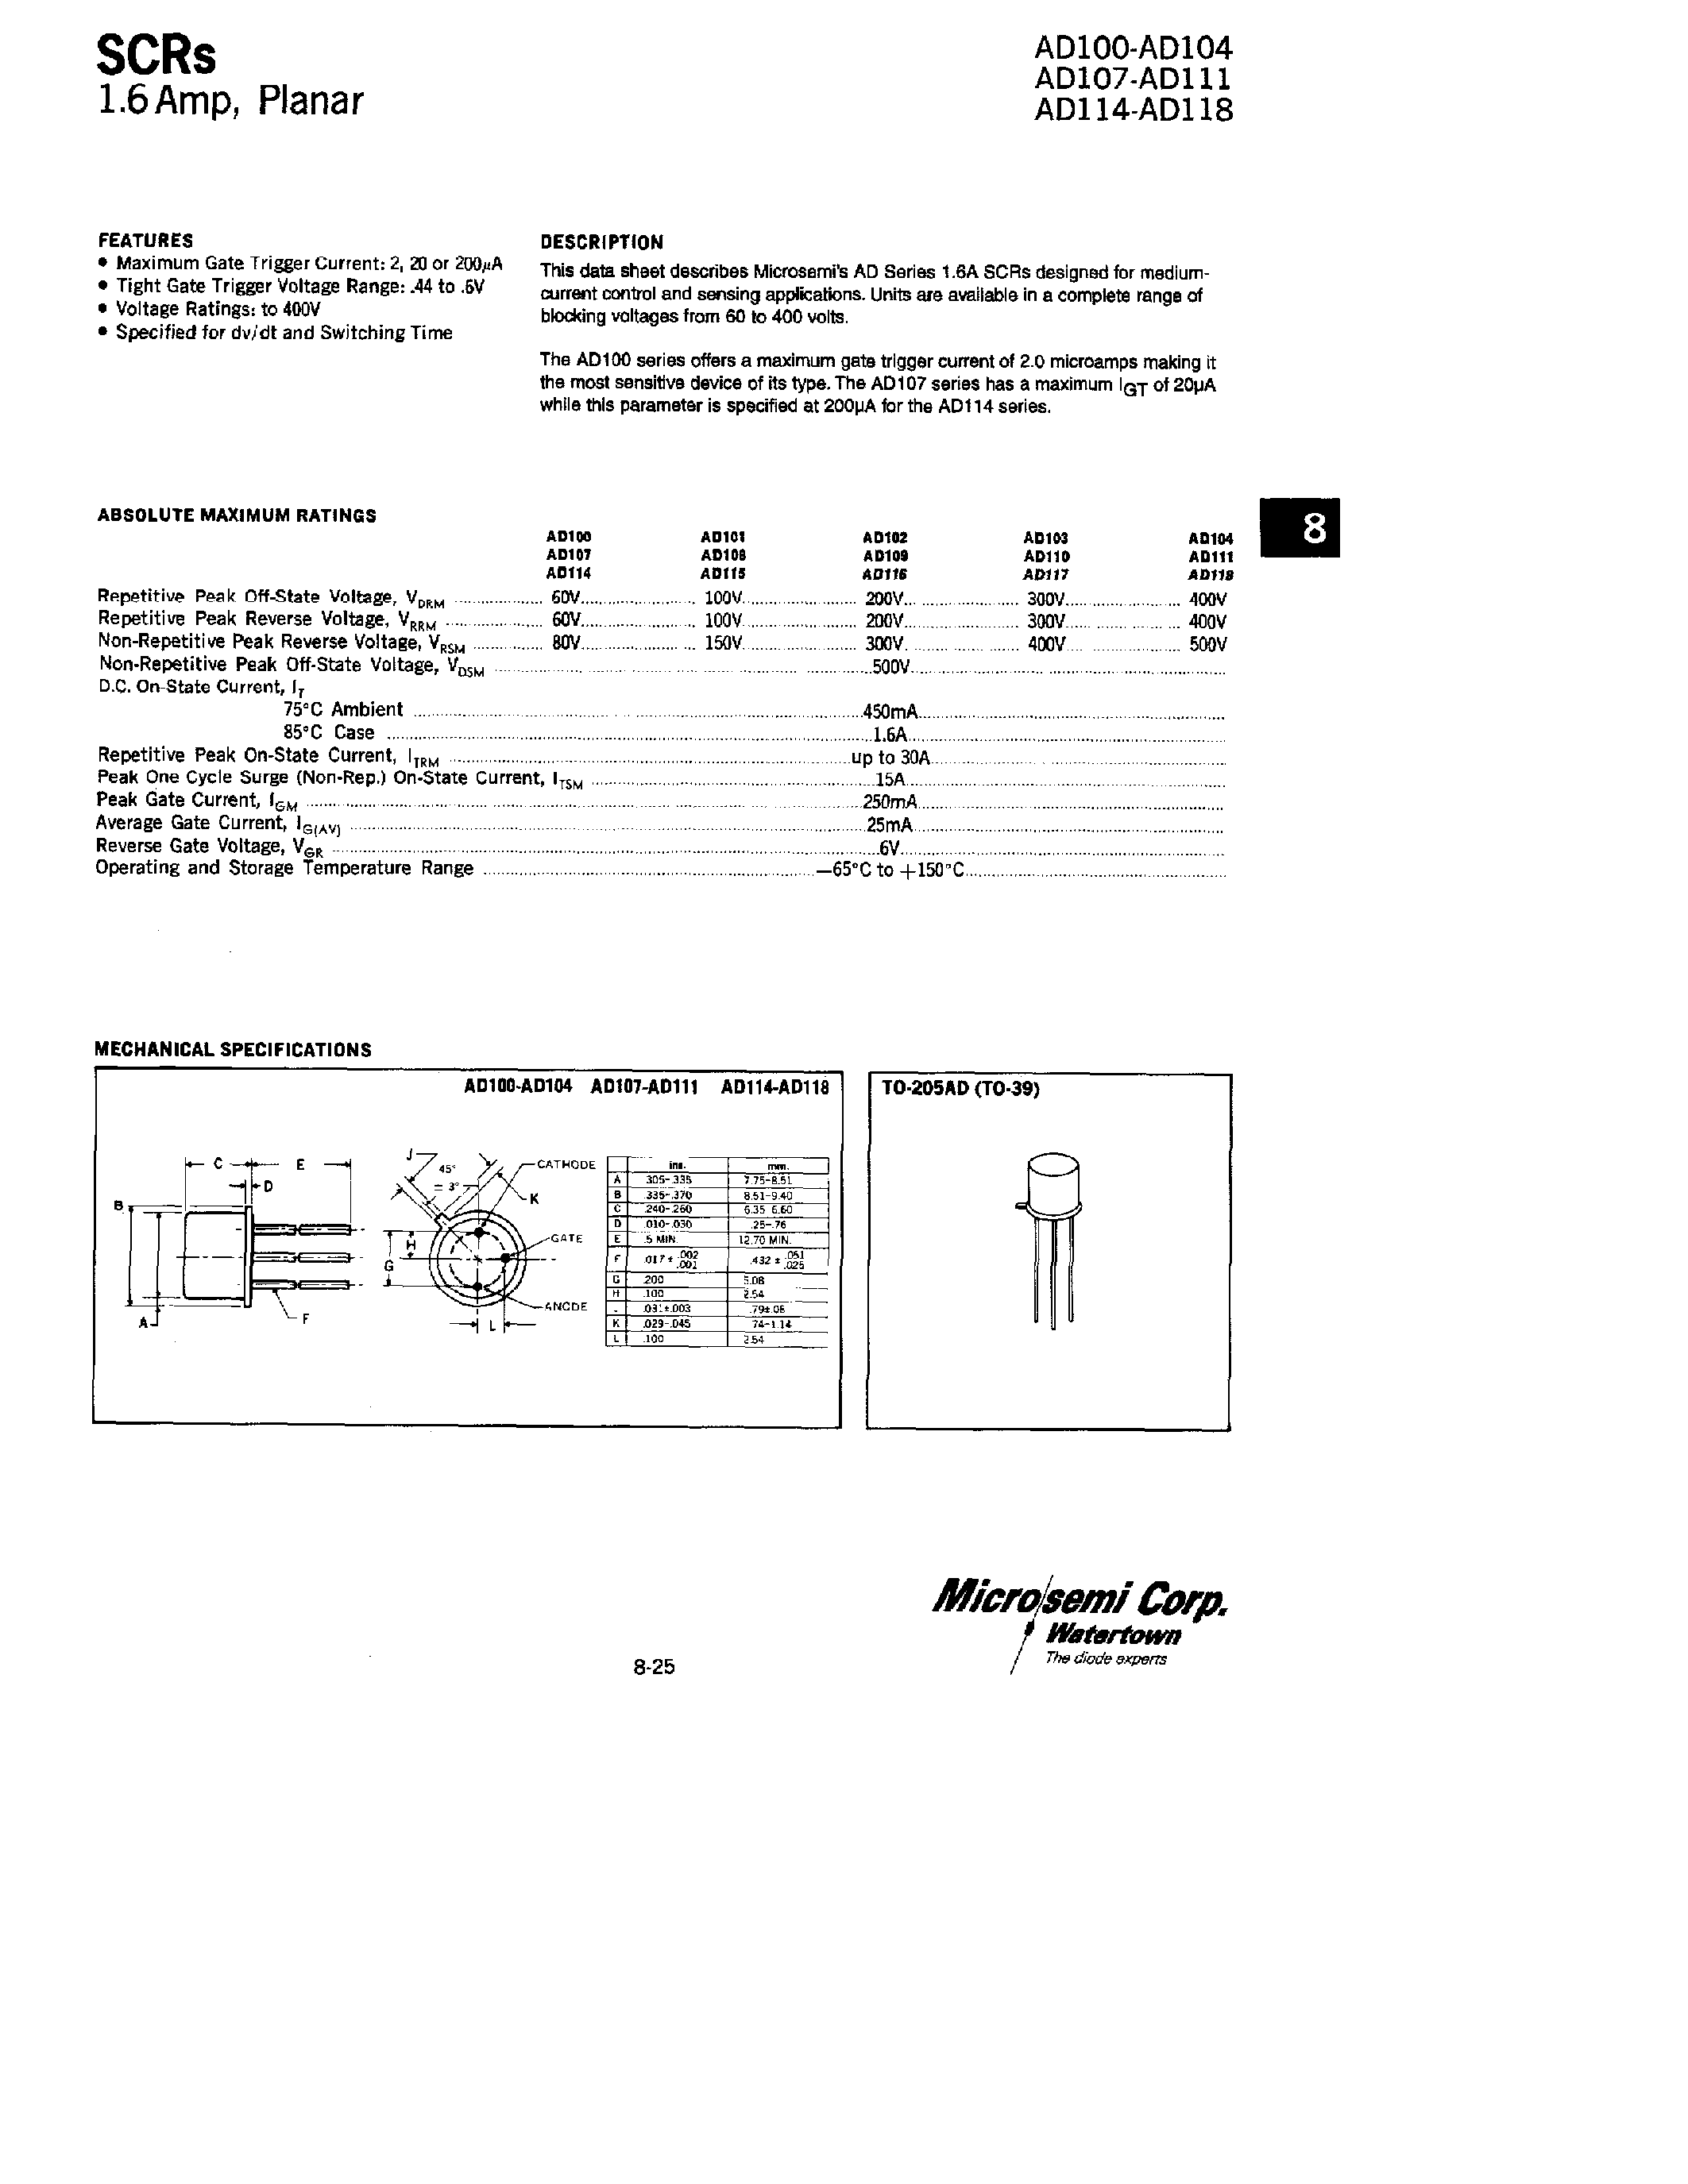 Datasheet AD114 - SCRs 1.5 Amp/ Planar page 1